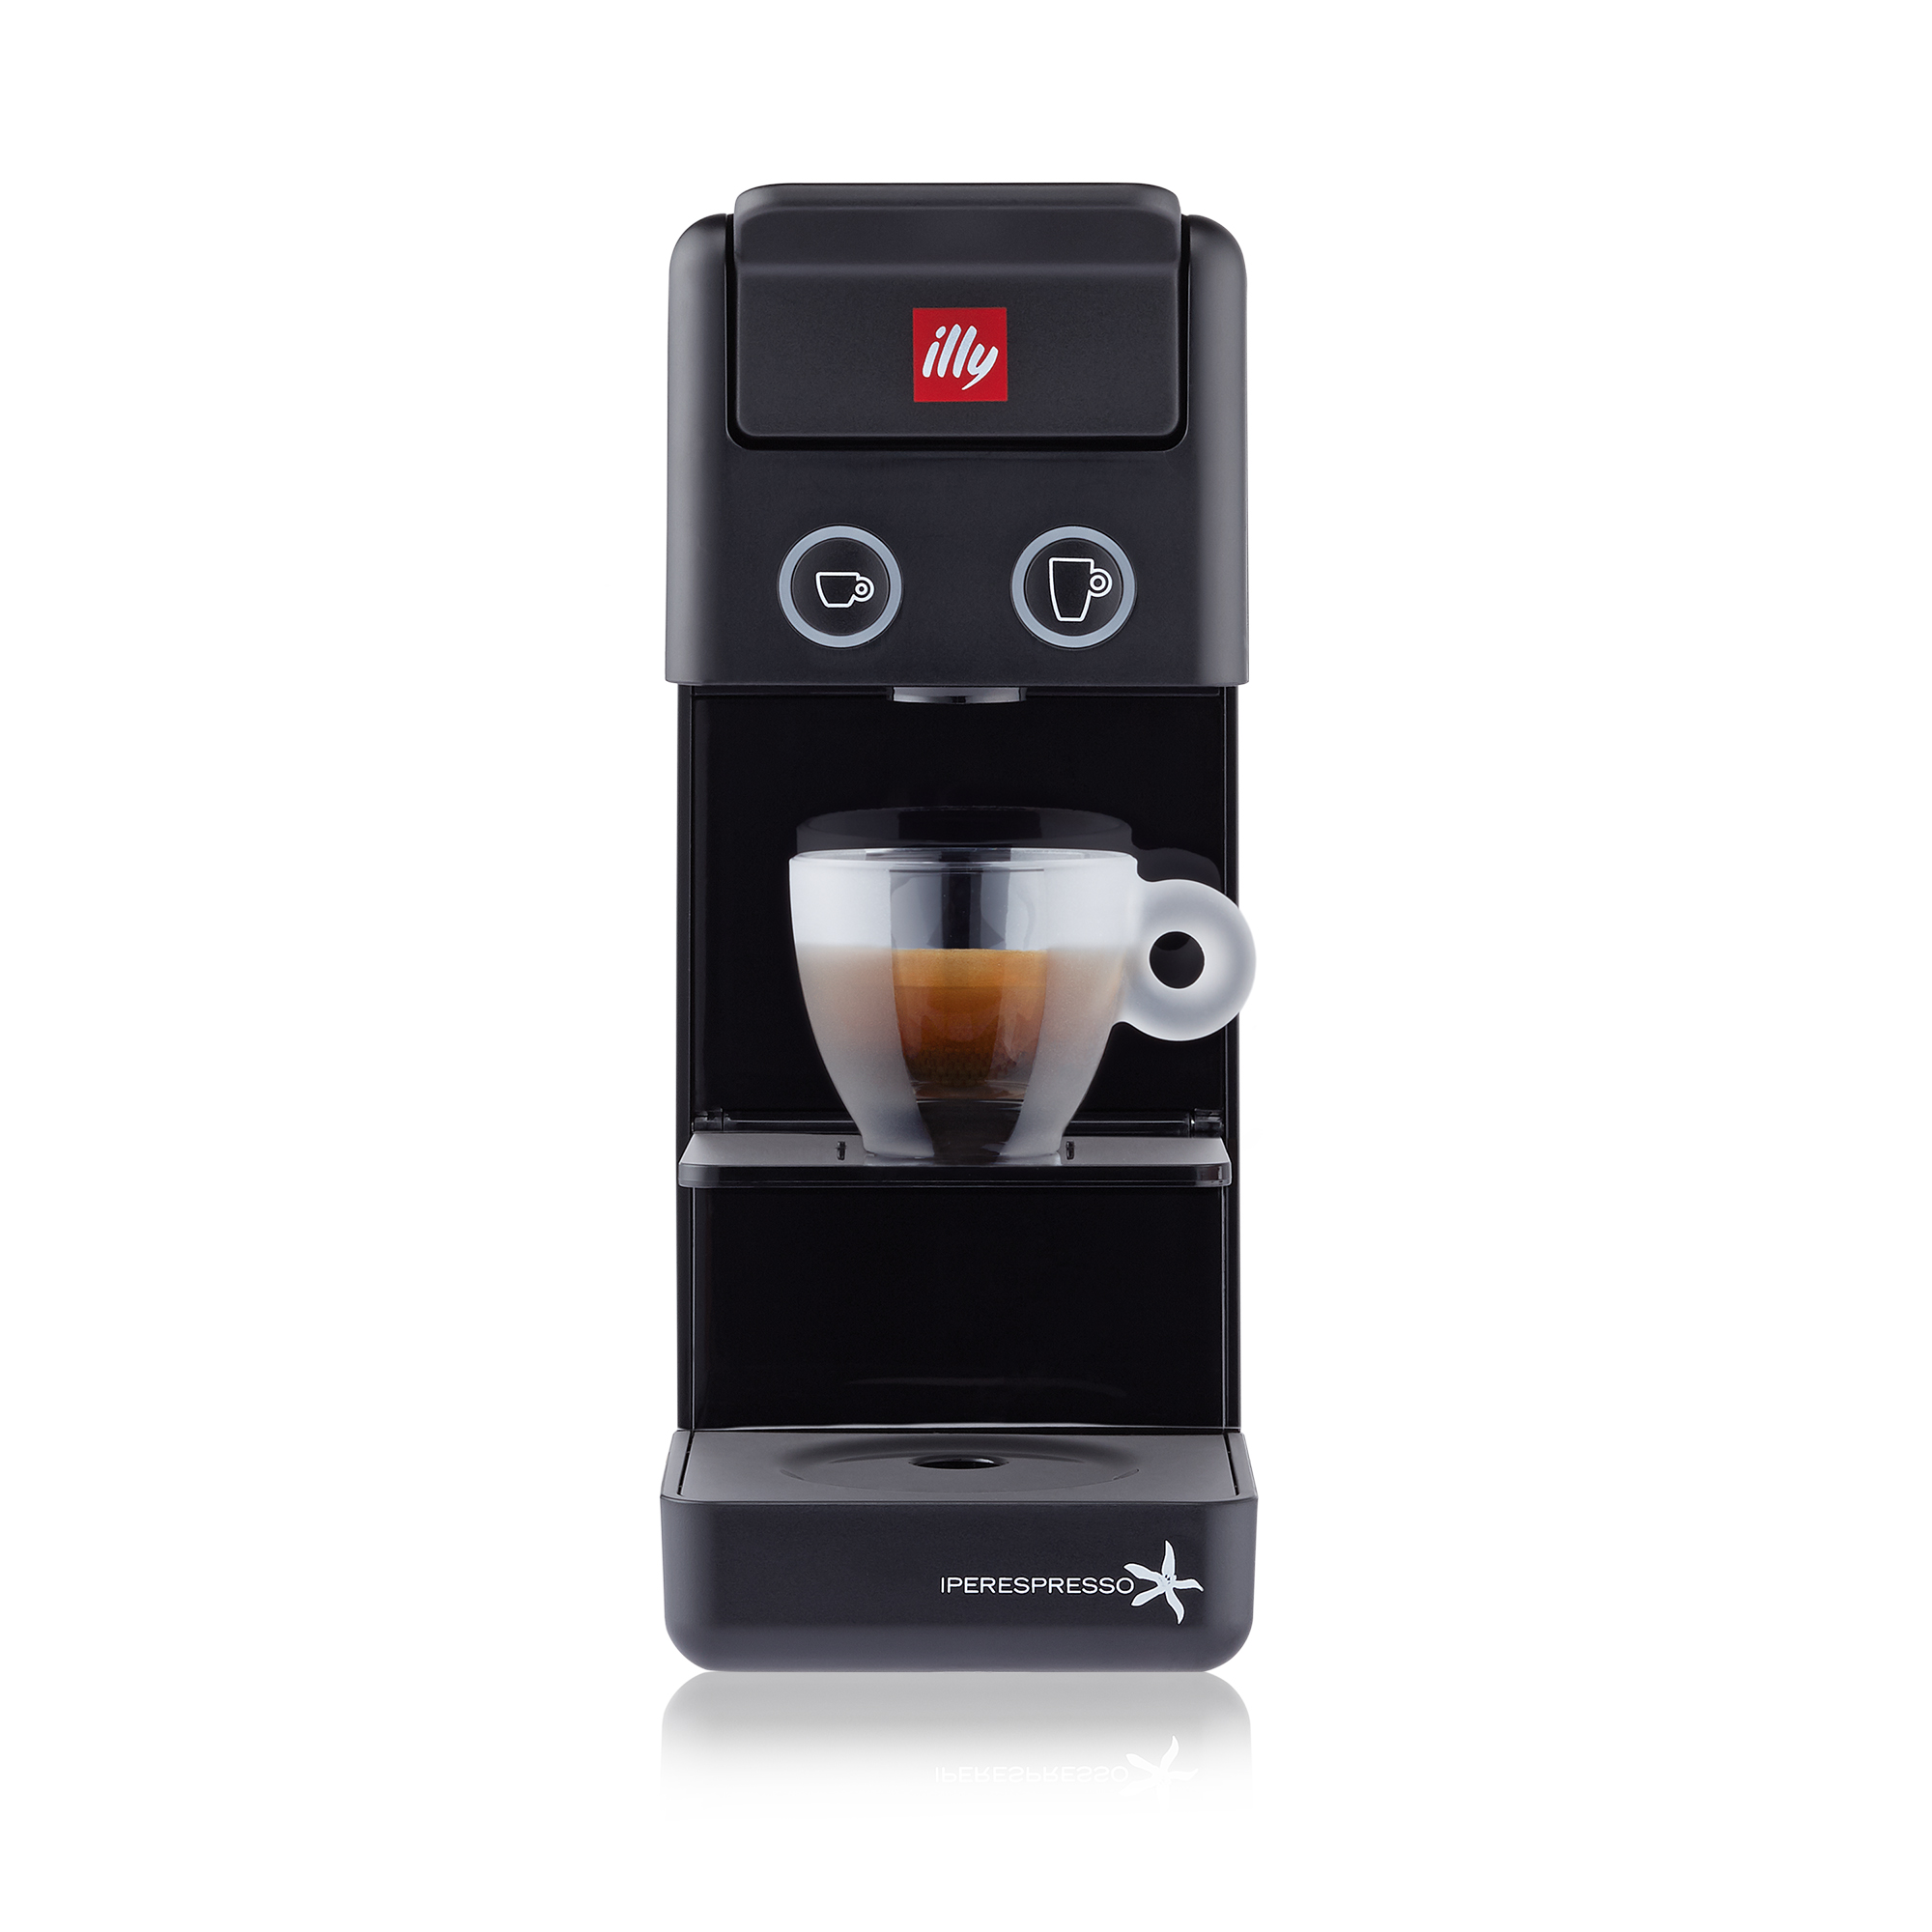 illy Y3.2 iperEspresso Espresso & Coffee Machine - Black